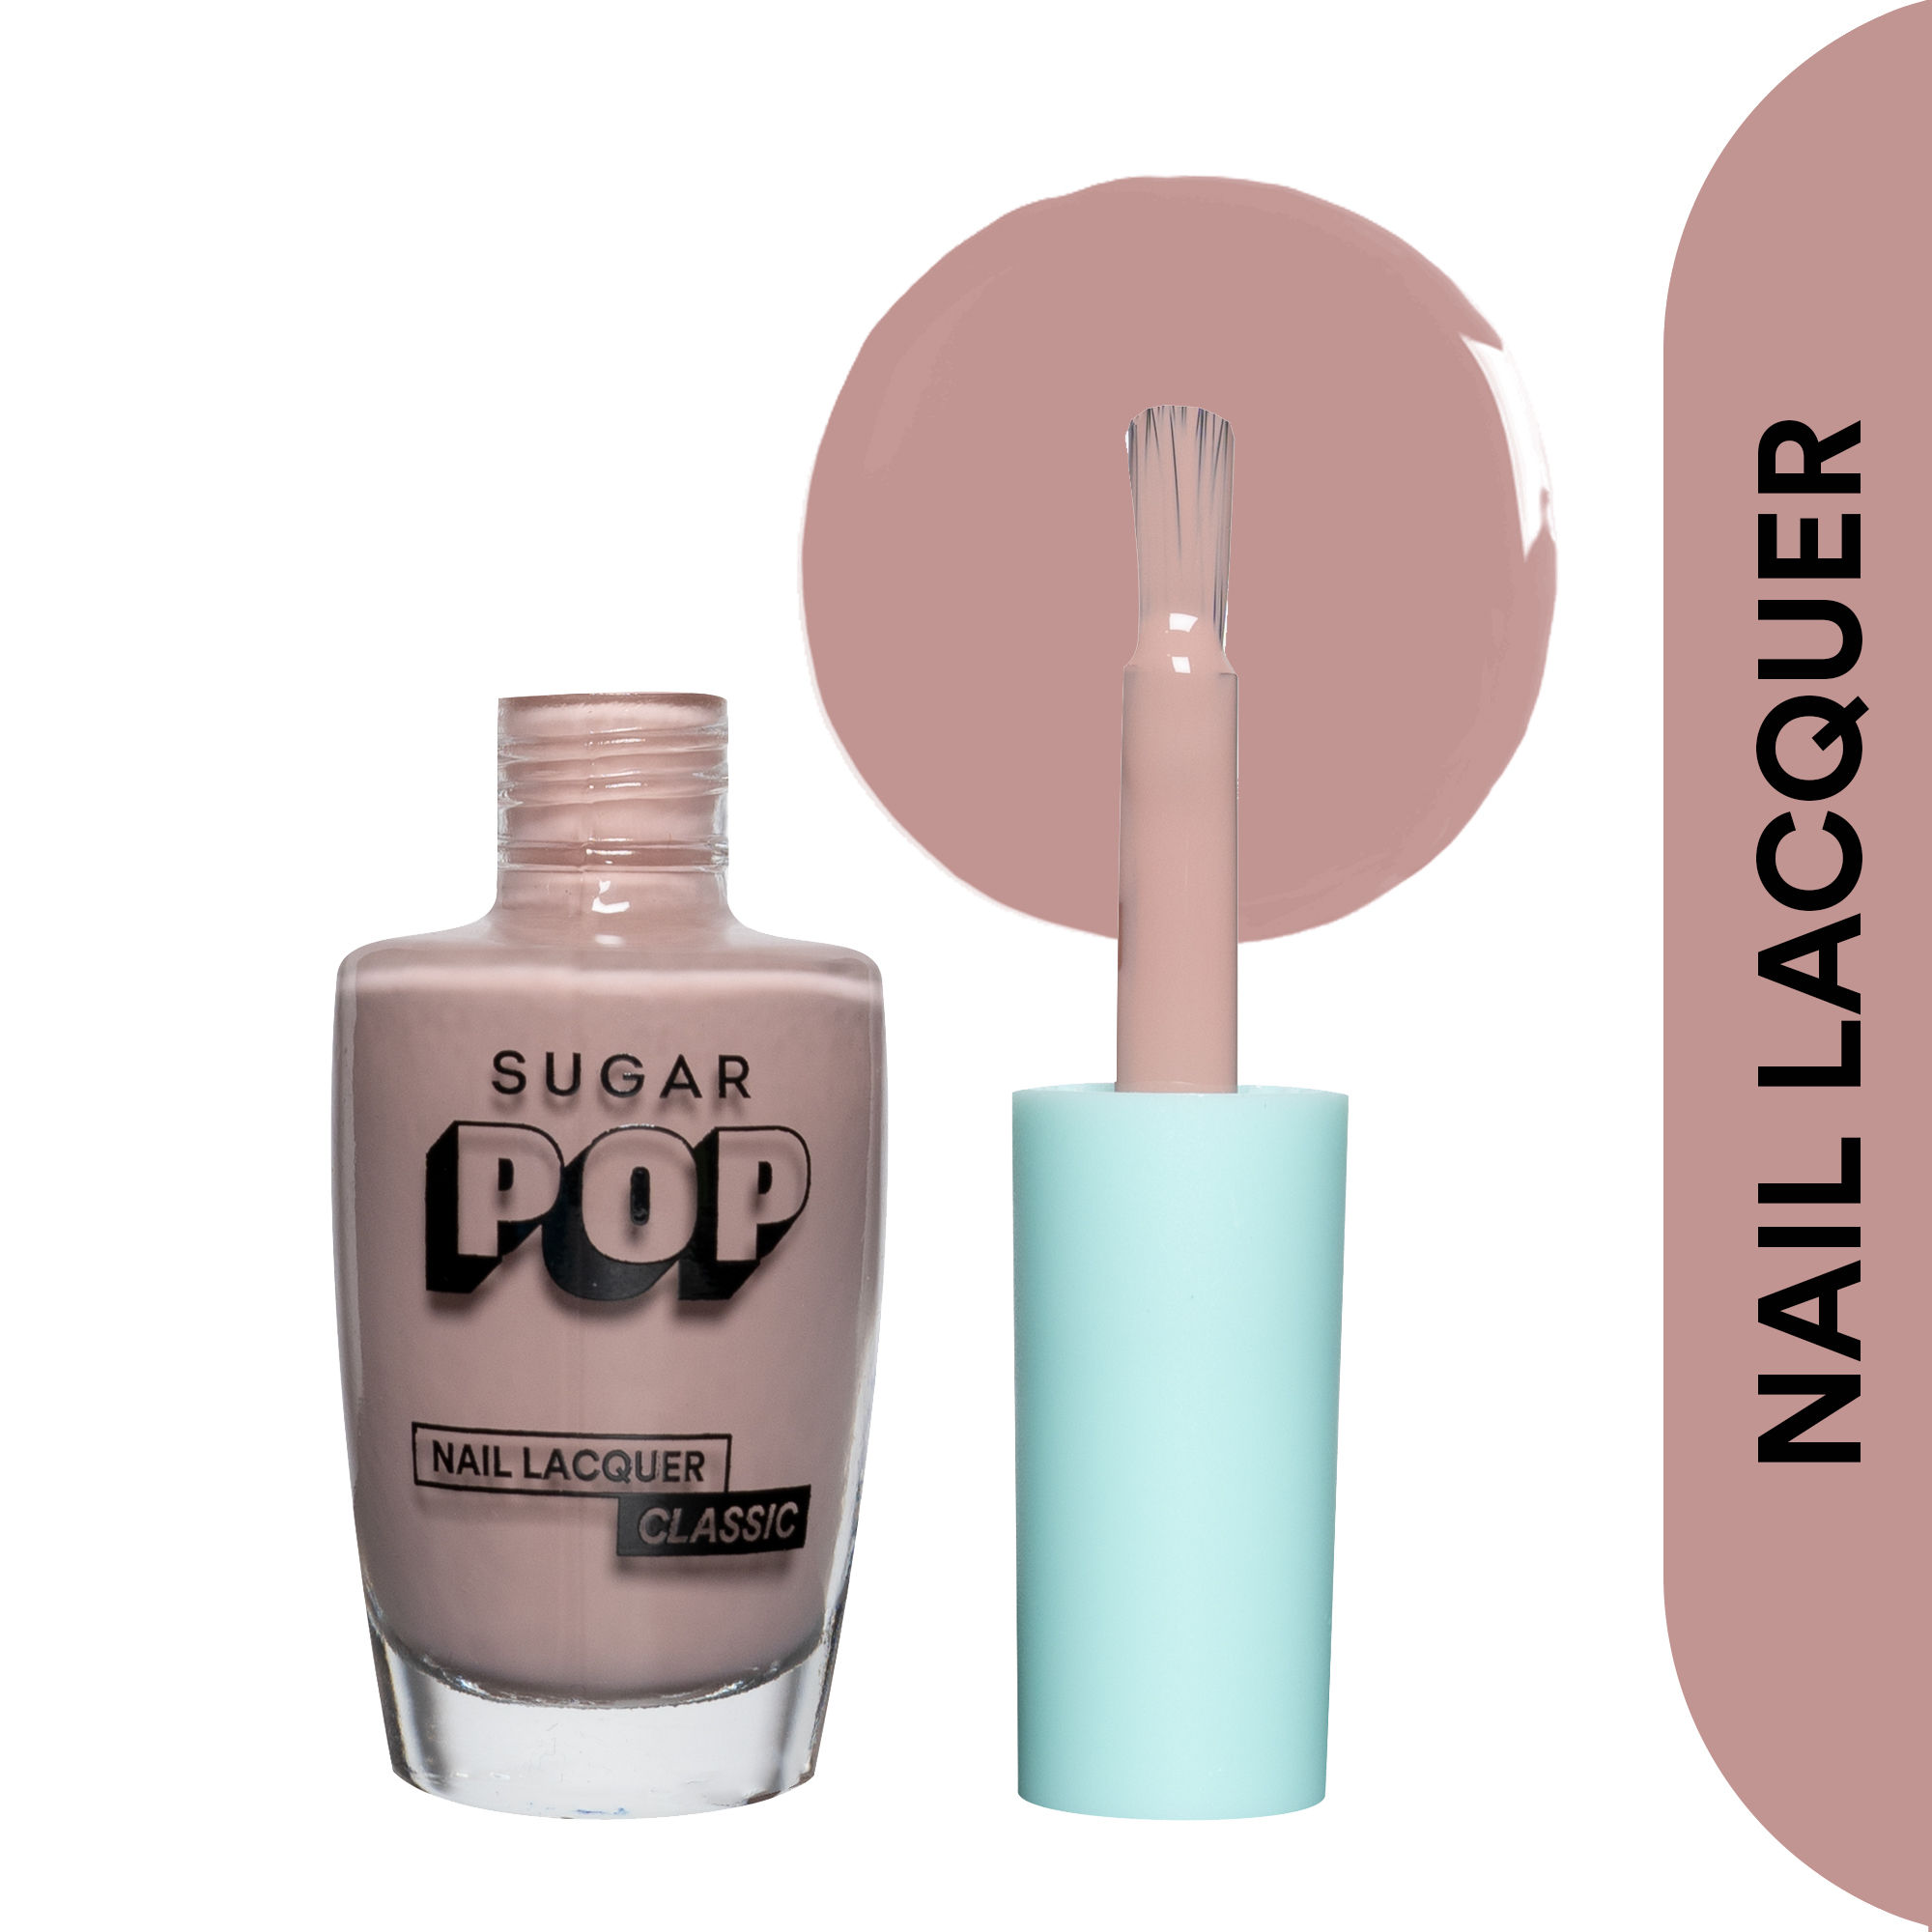 Share more than 150 sugar pop nail polish latest